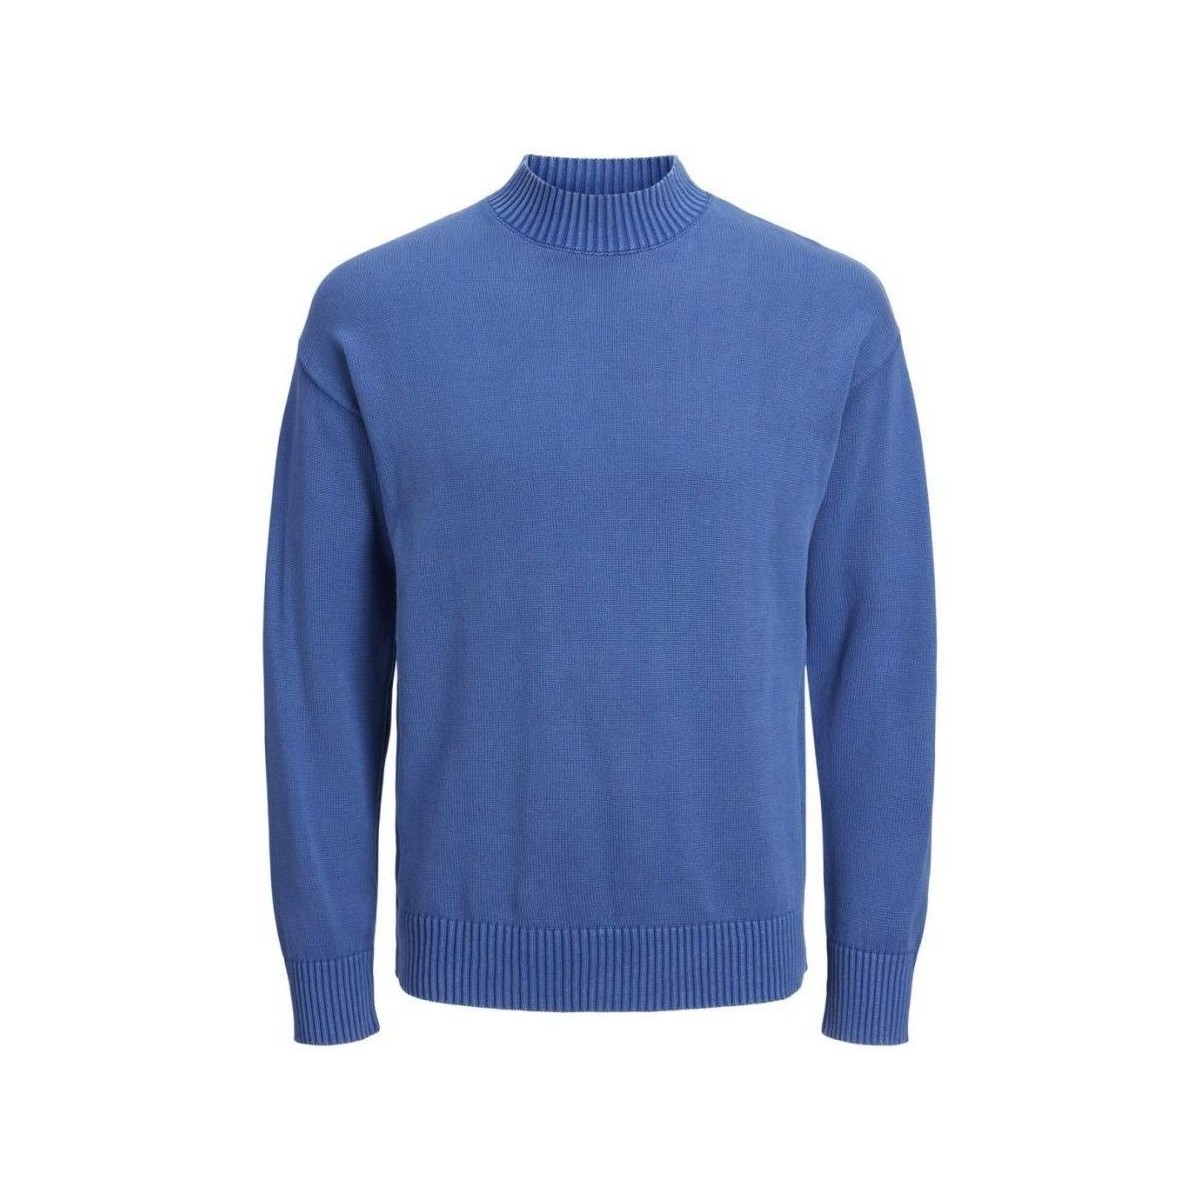 Vêtements Homme Pulls Jack & Jones 12216176 JORWILLIAM-NAUTICAL BLUE Bleu